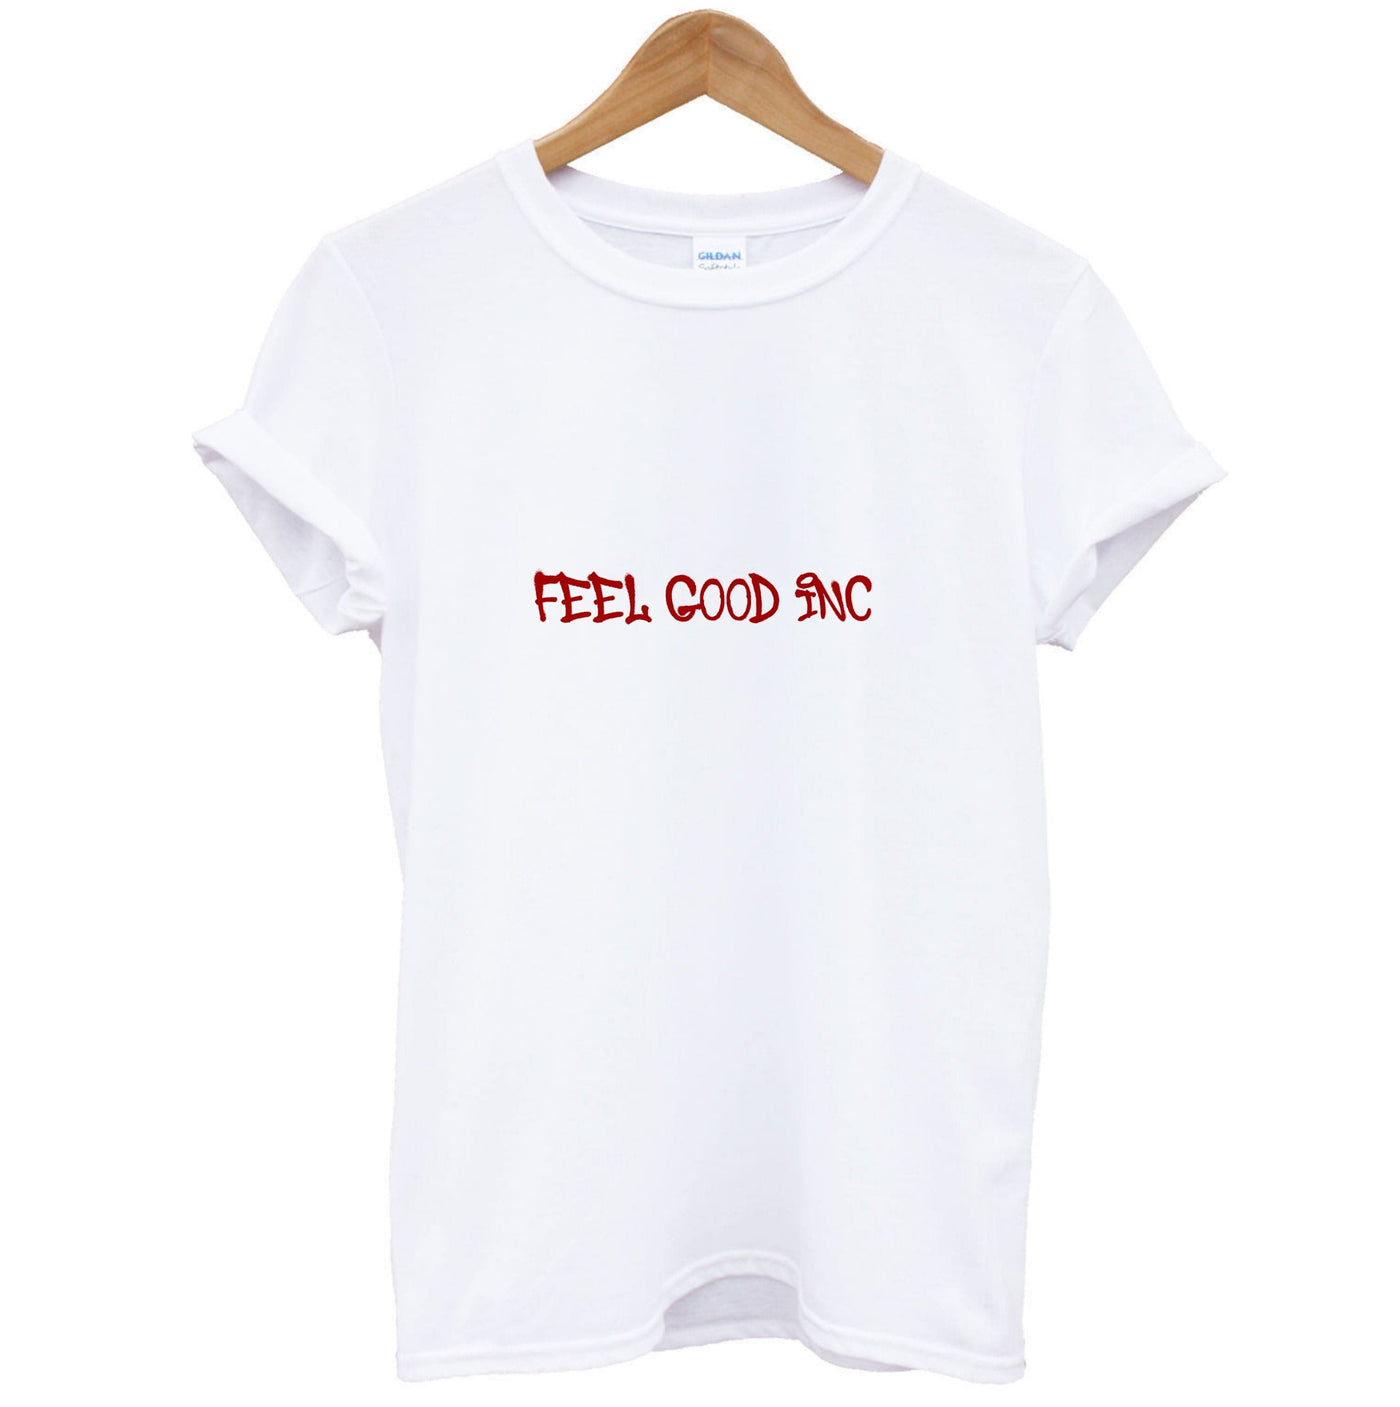 Feel Good Inc - Gorillaz T-Shirt